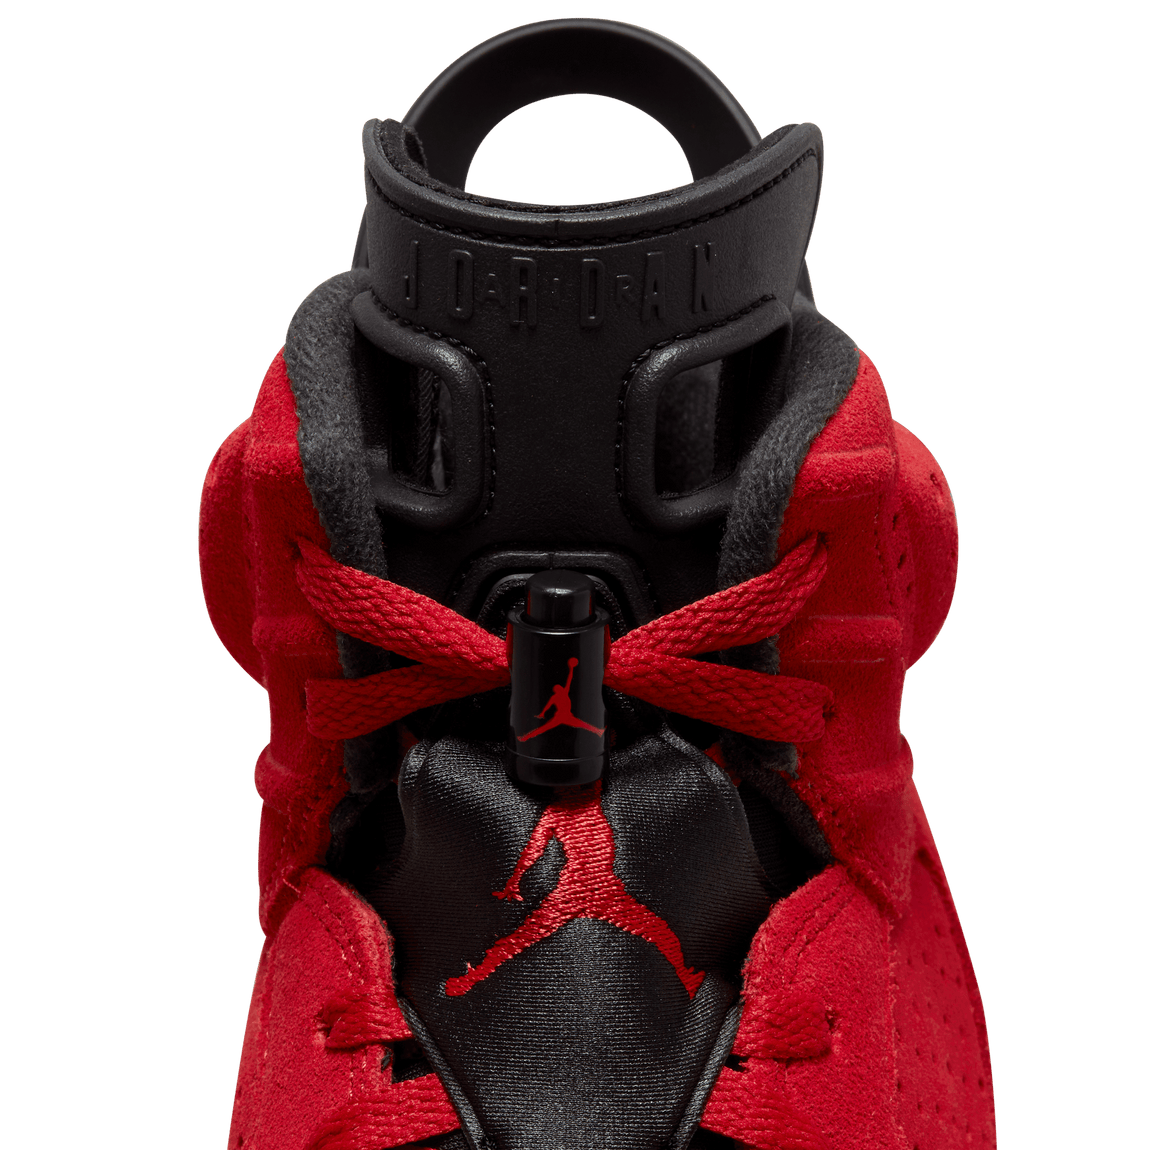 Air Jordan 6 Retro (Varsity Red/Black) 5/24 - Air Jordan 6 Retro (Varsity Red/Black) 5/24 - 